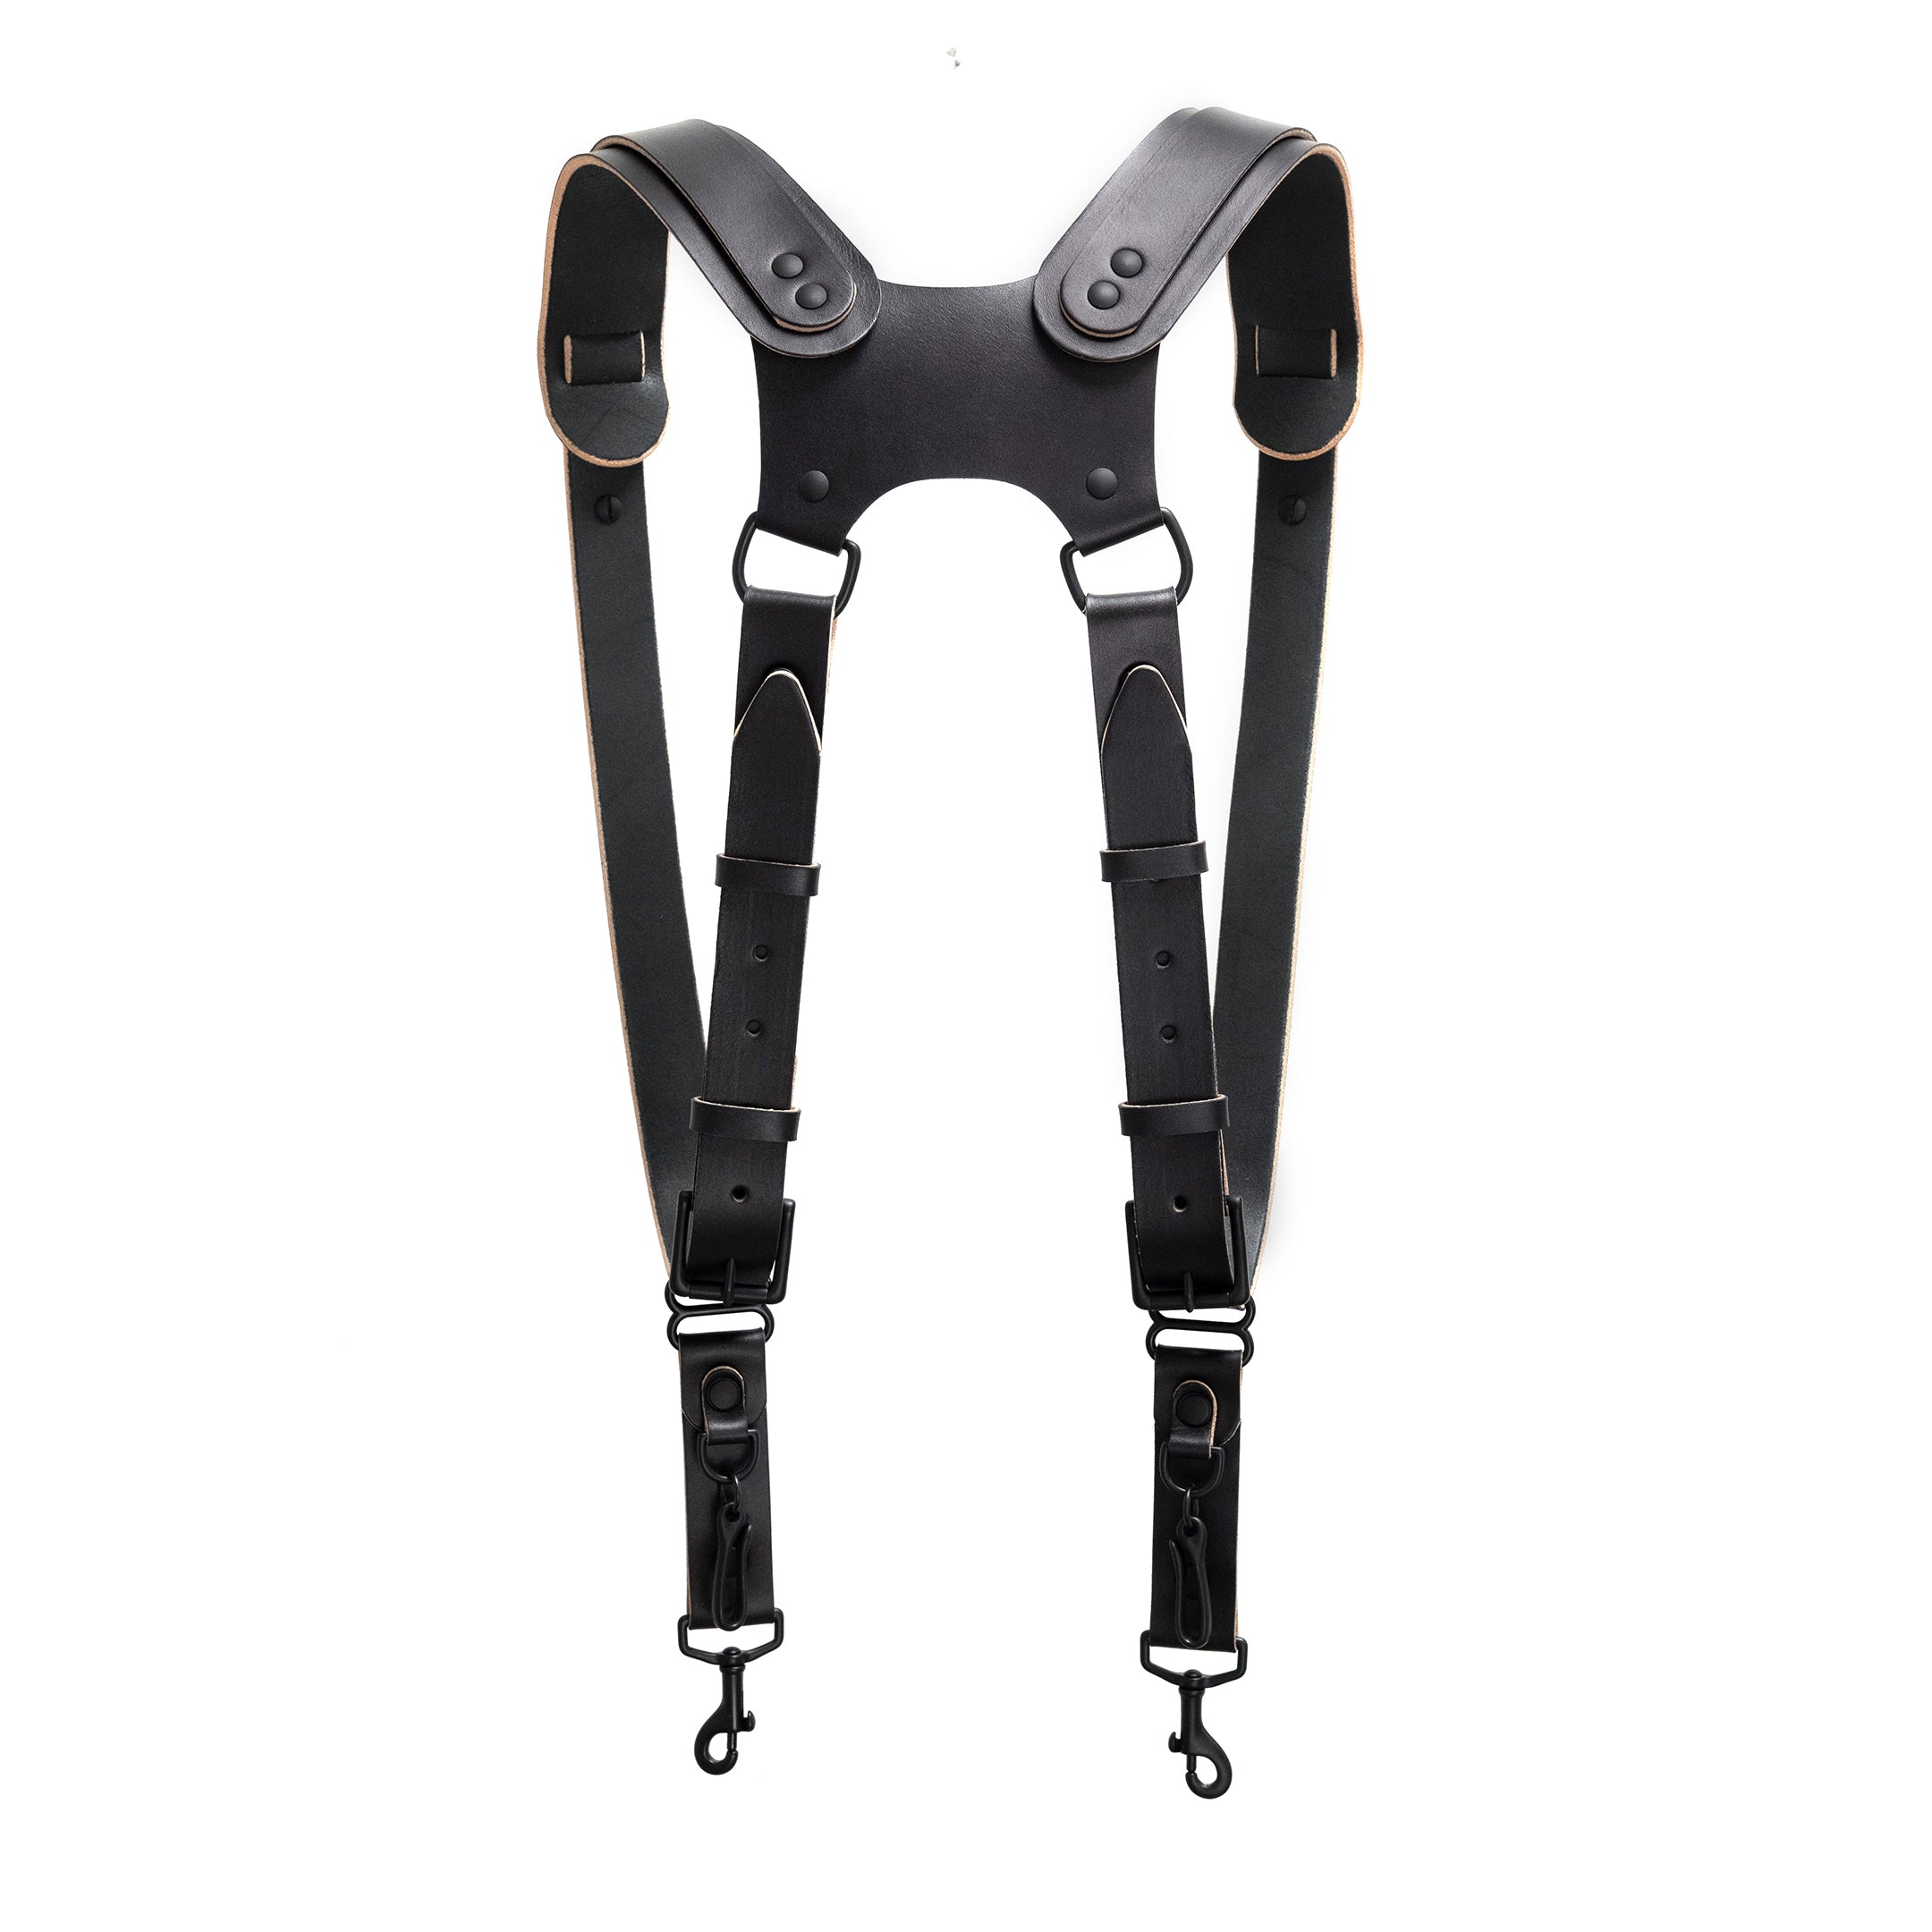 Fab' F22 harness - Black leather - Size XS